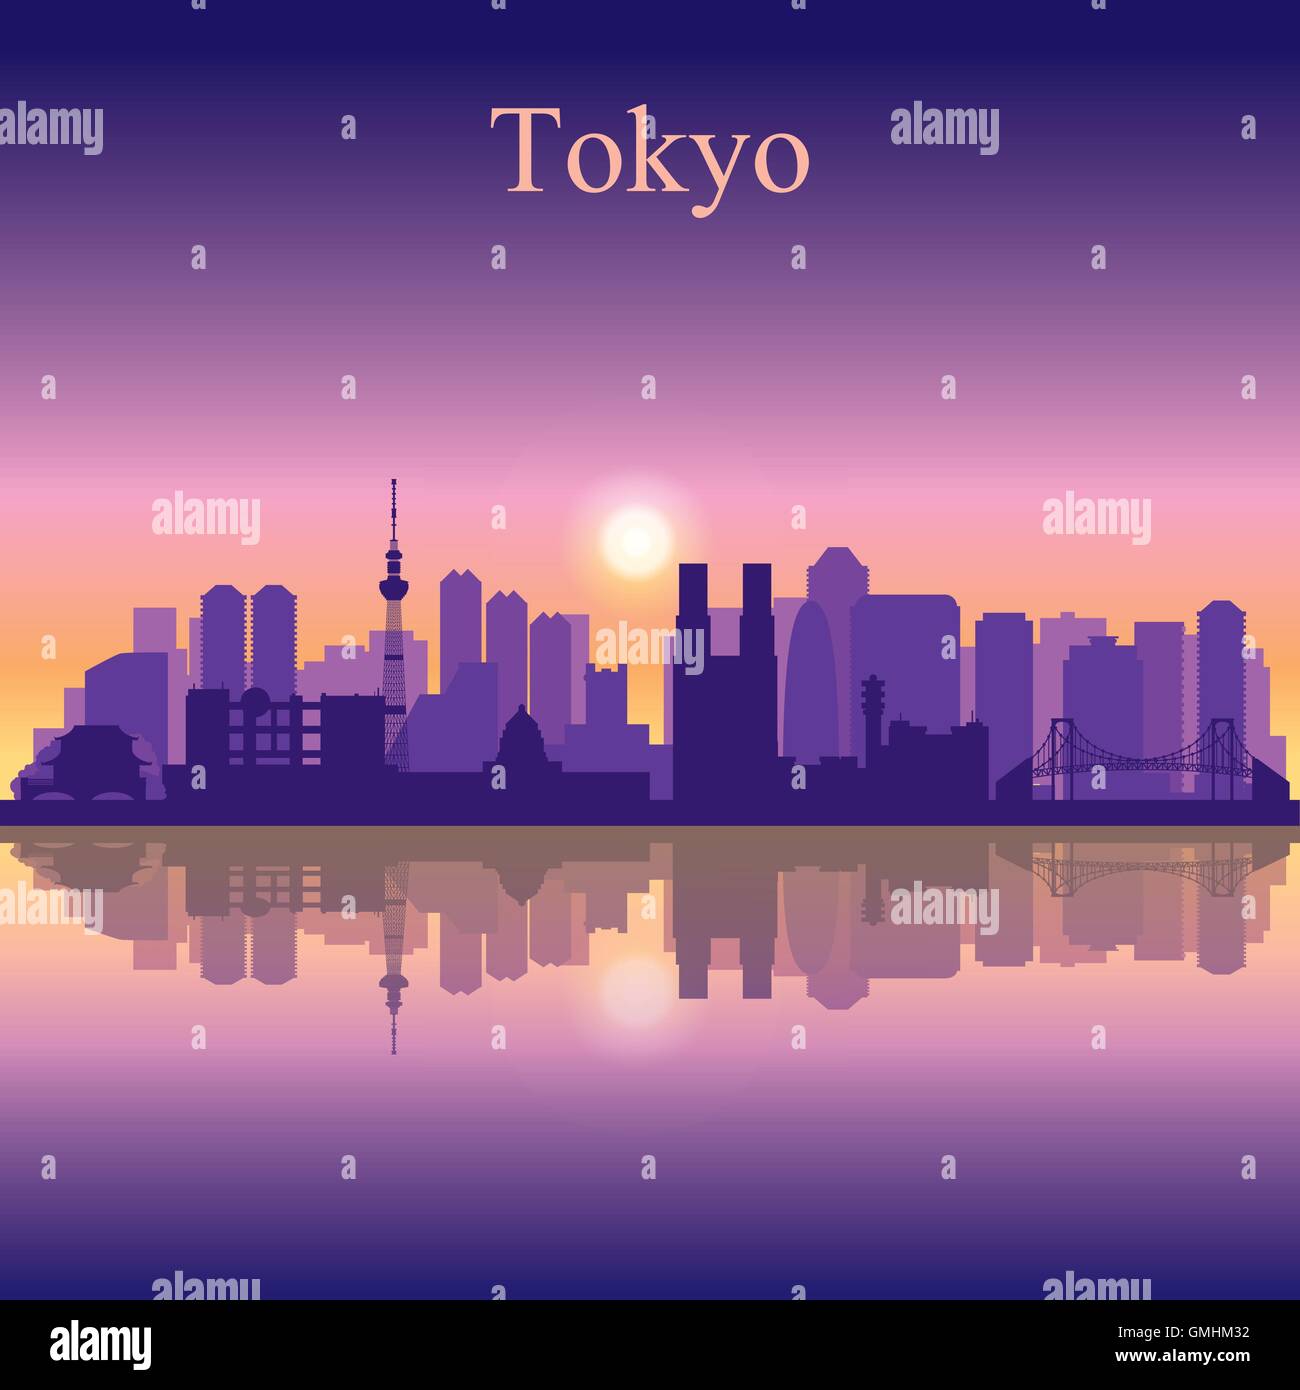 Tokyo city skyline silhouette background Stock Vector